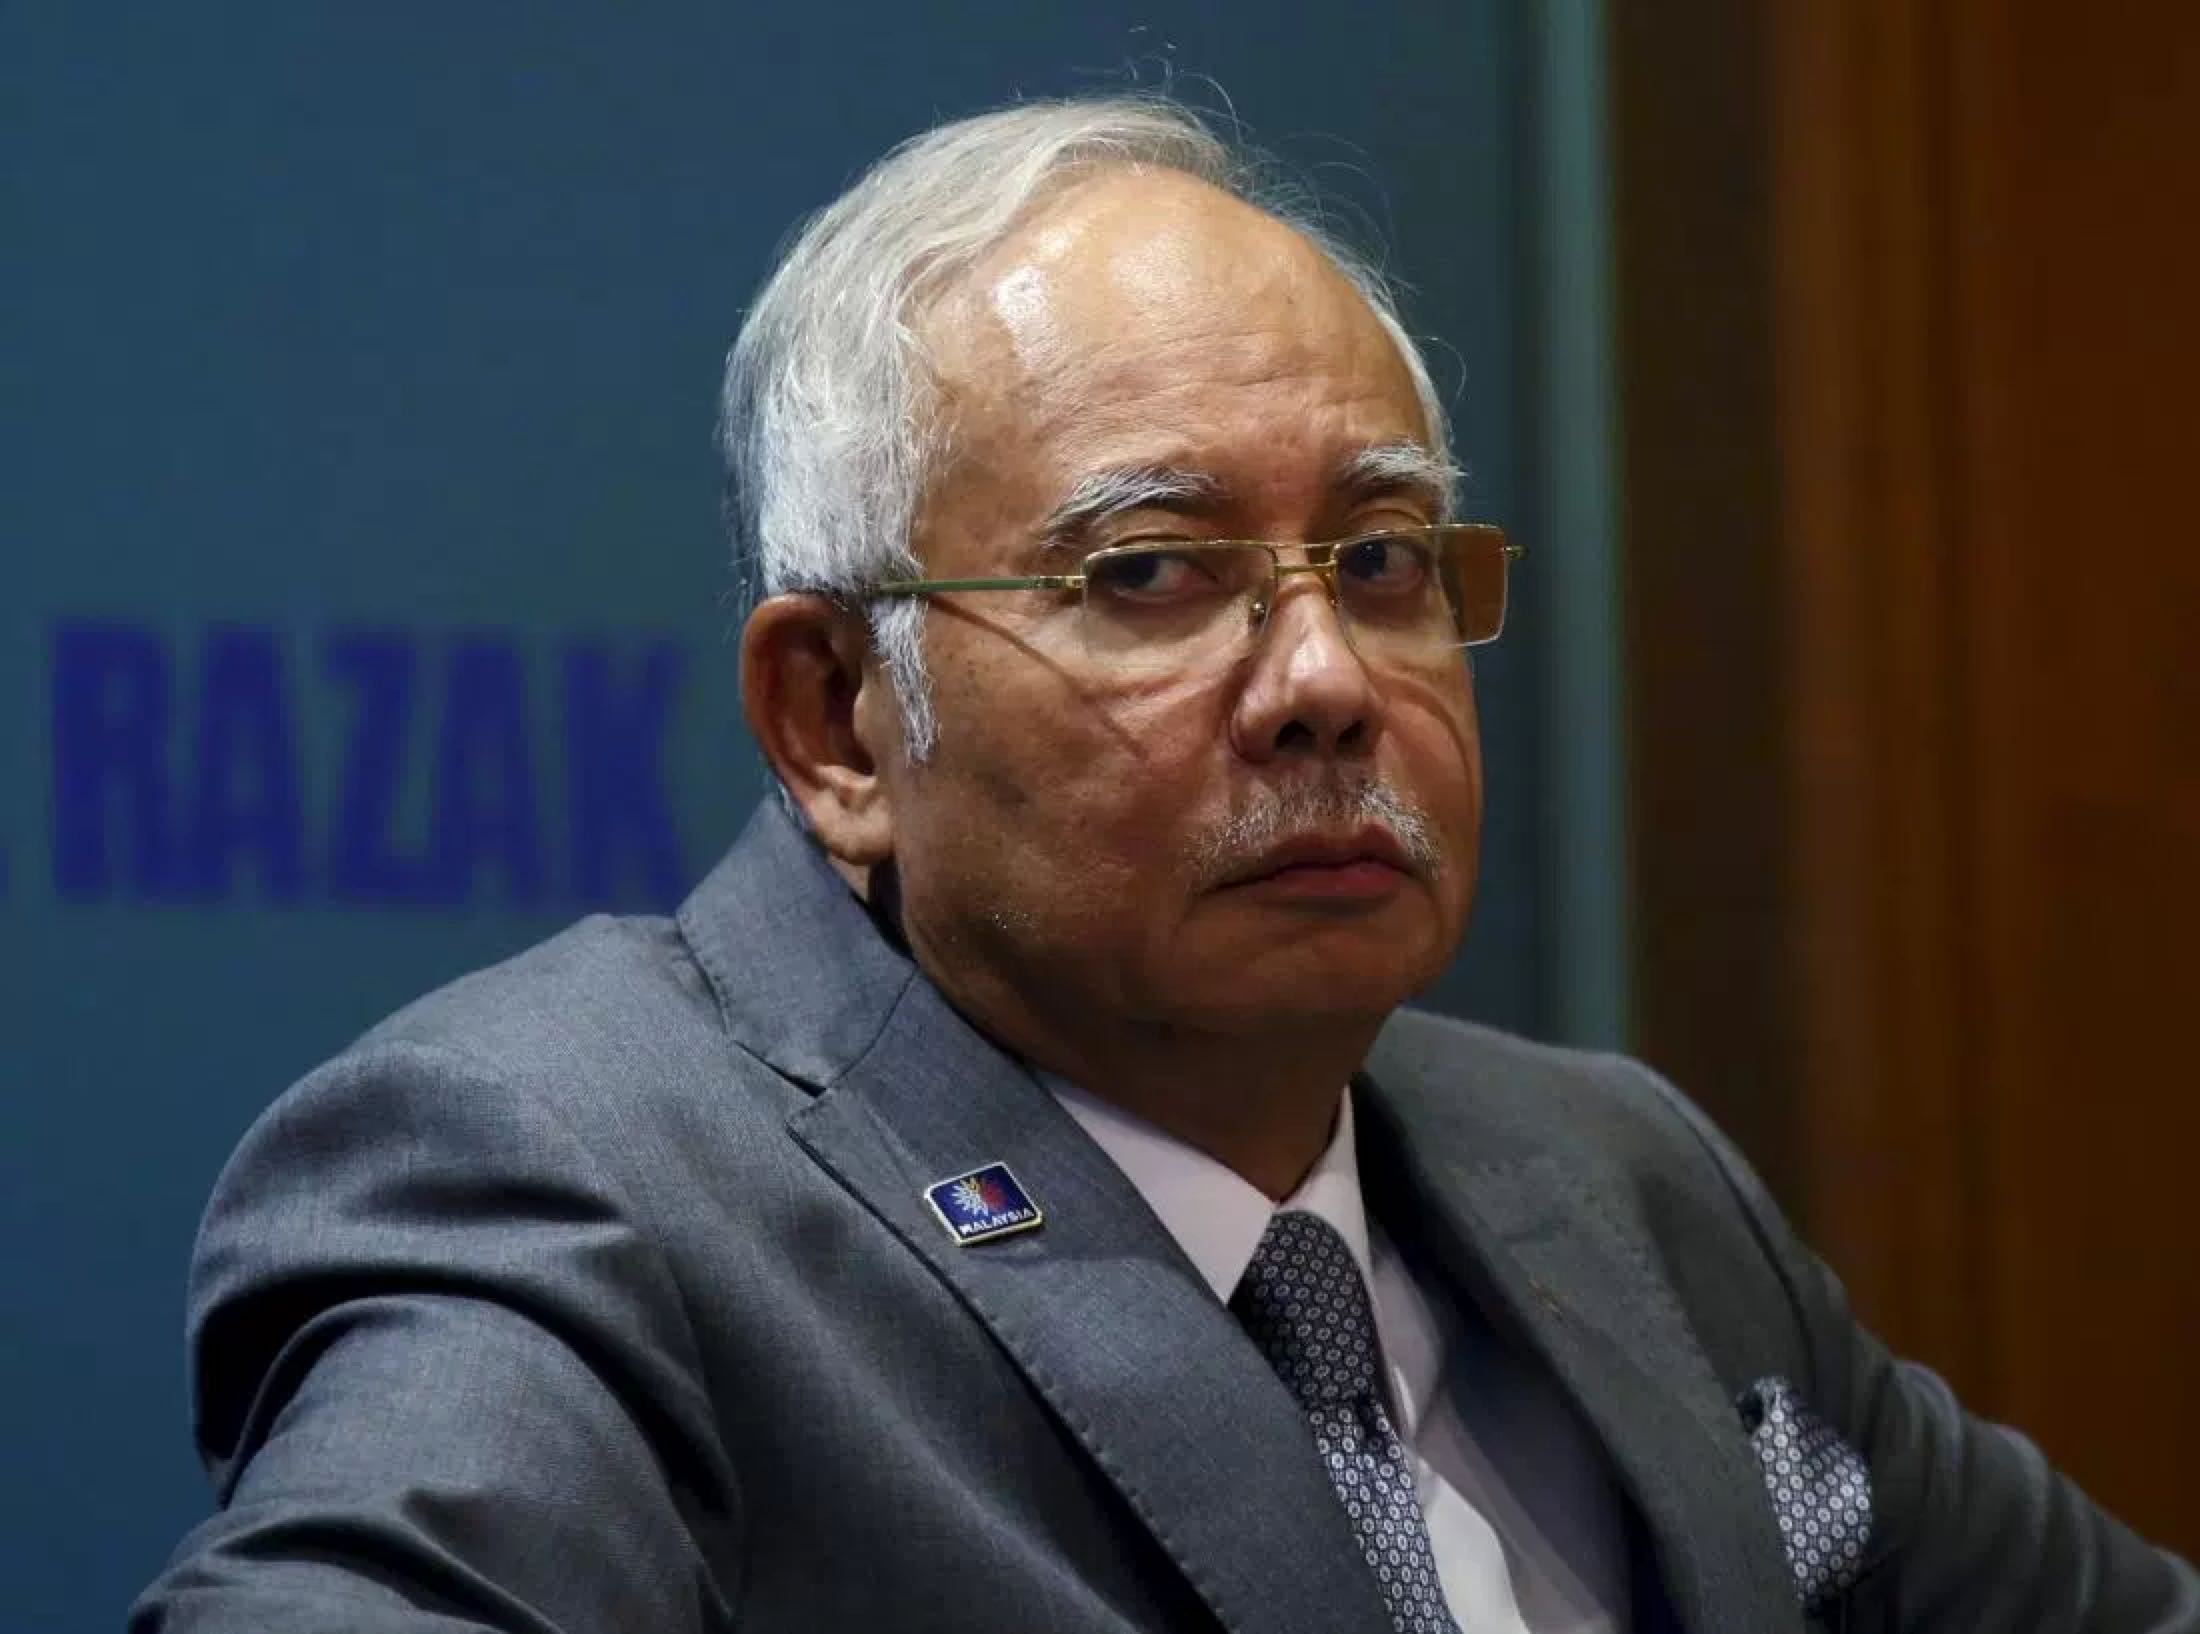 Mantan Perdana Menteri (PM) Najib Razak diduga terkait kasus megakorupsi 1Malaysia Development Berhad (1MDB).